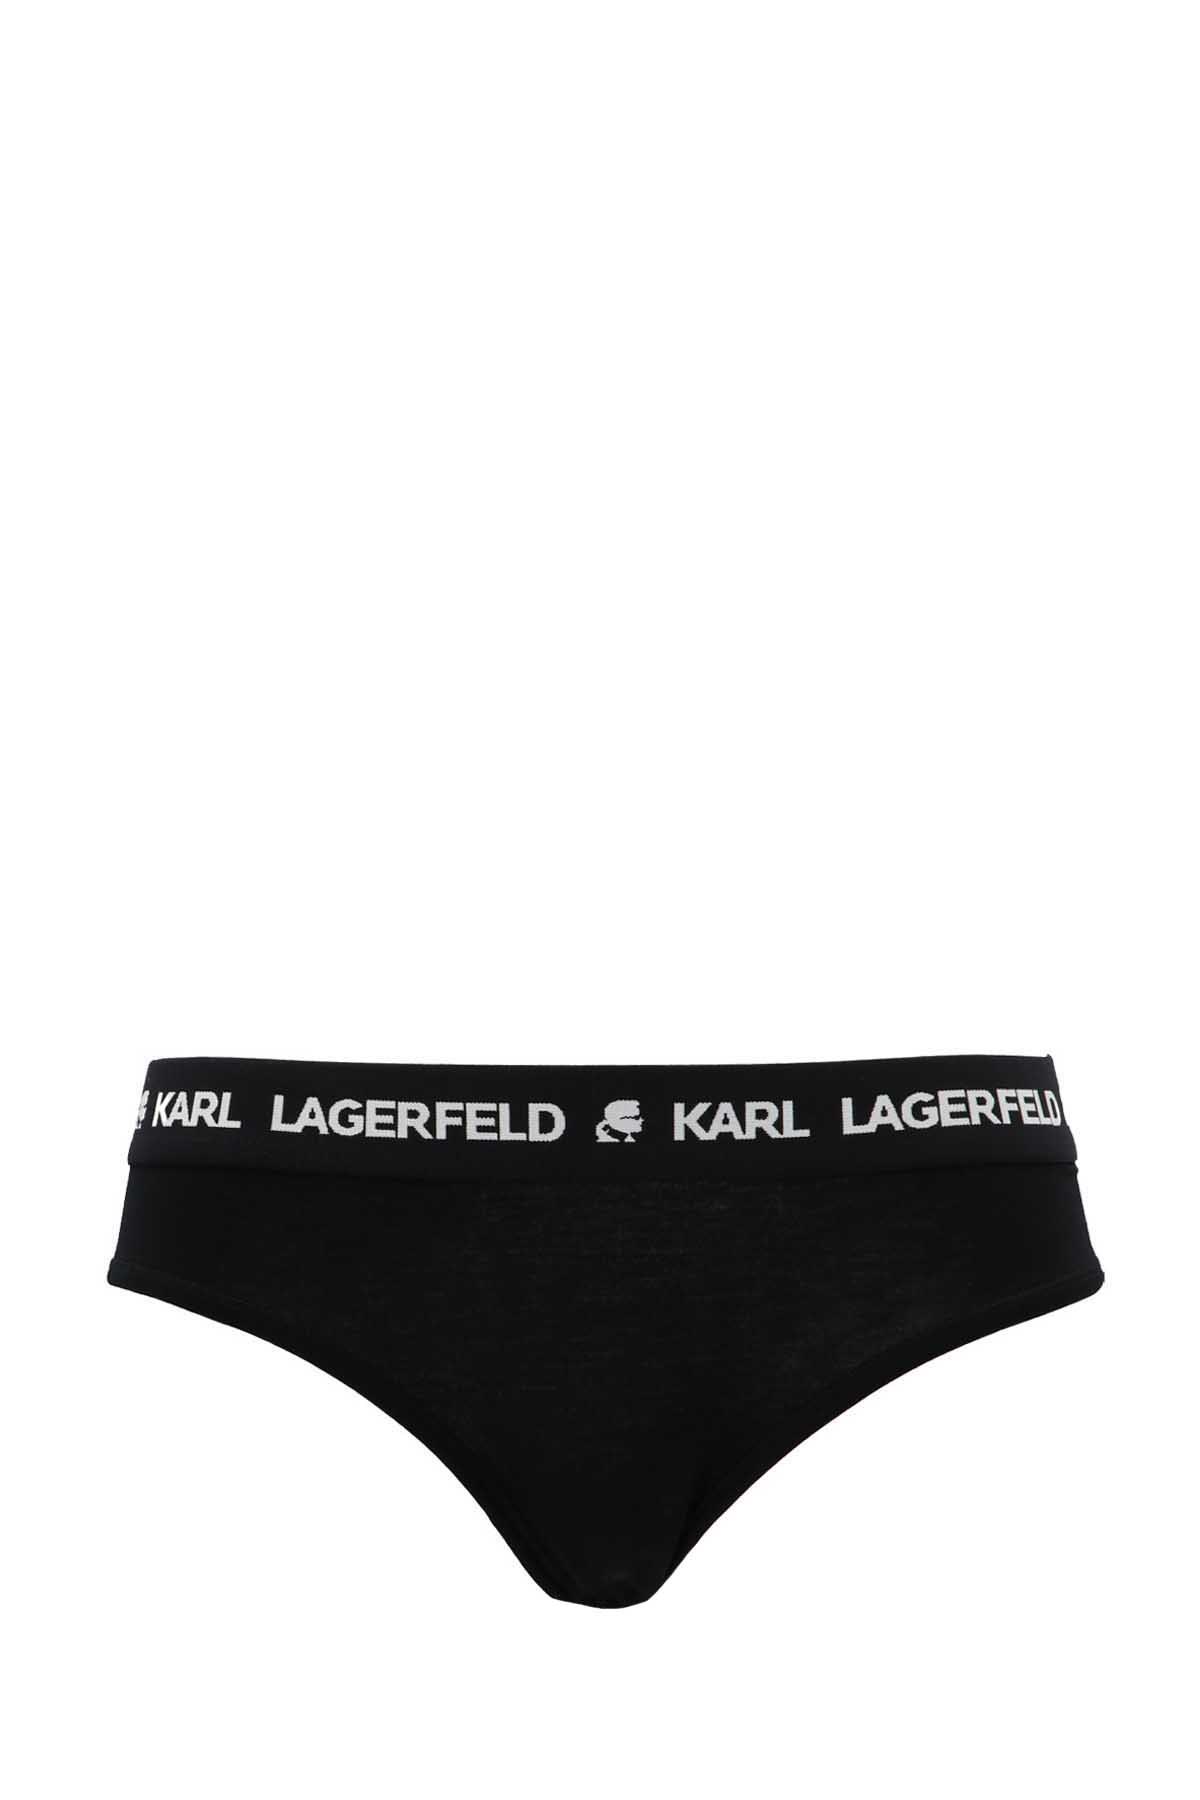 KARL LAGERFELD 'Hipsters’ 2-Brief Set